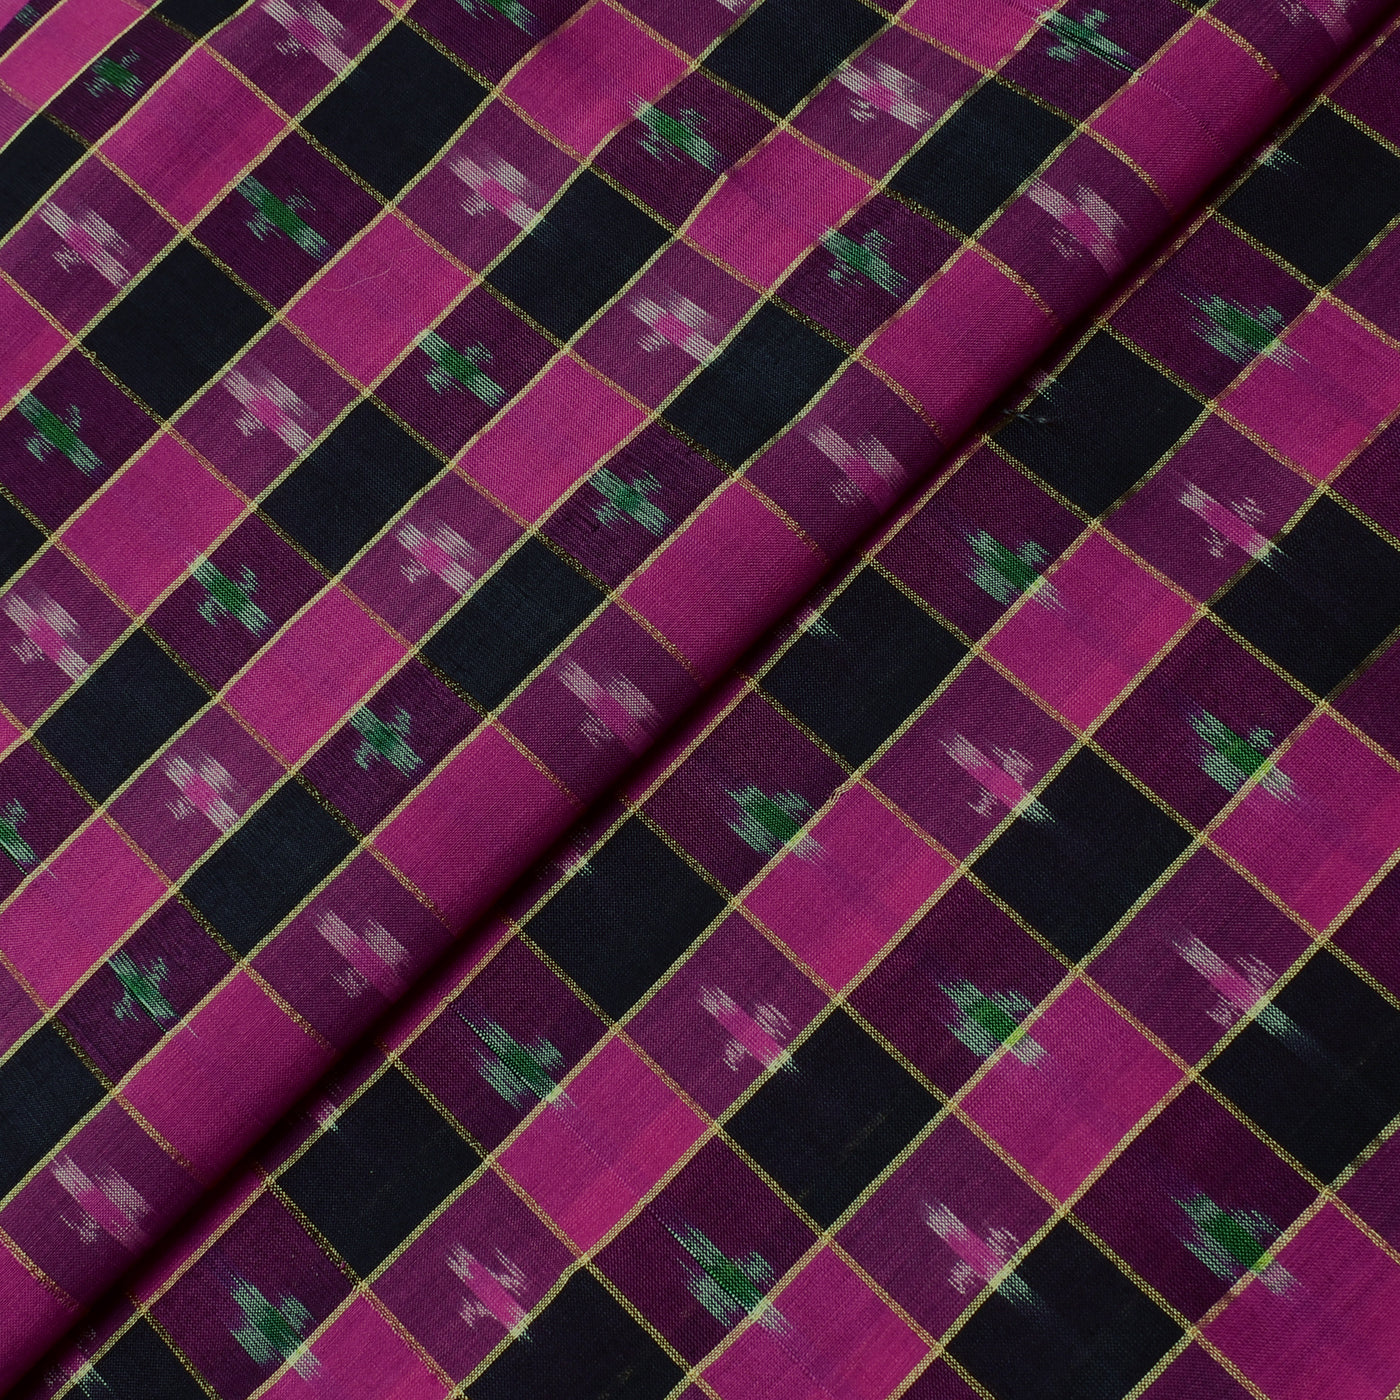 rose-and-black-zari-kattam-ikkat-silk-fabric